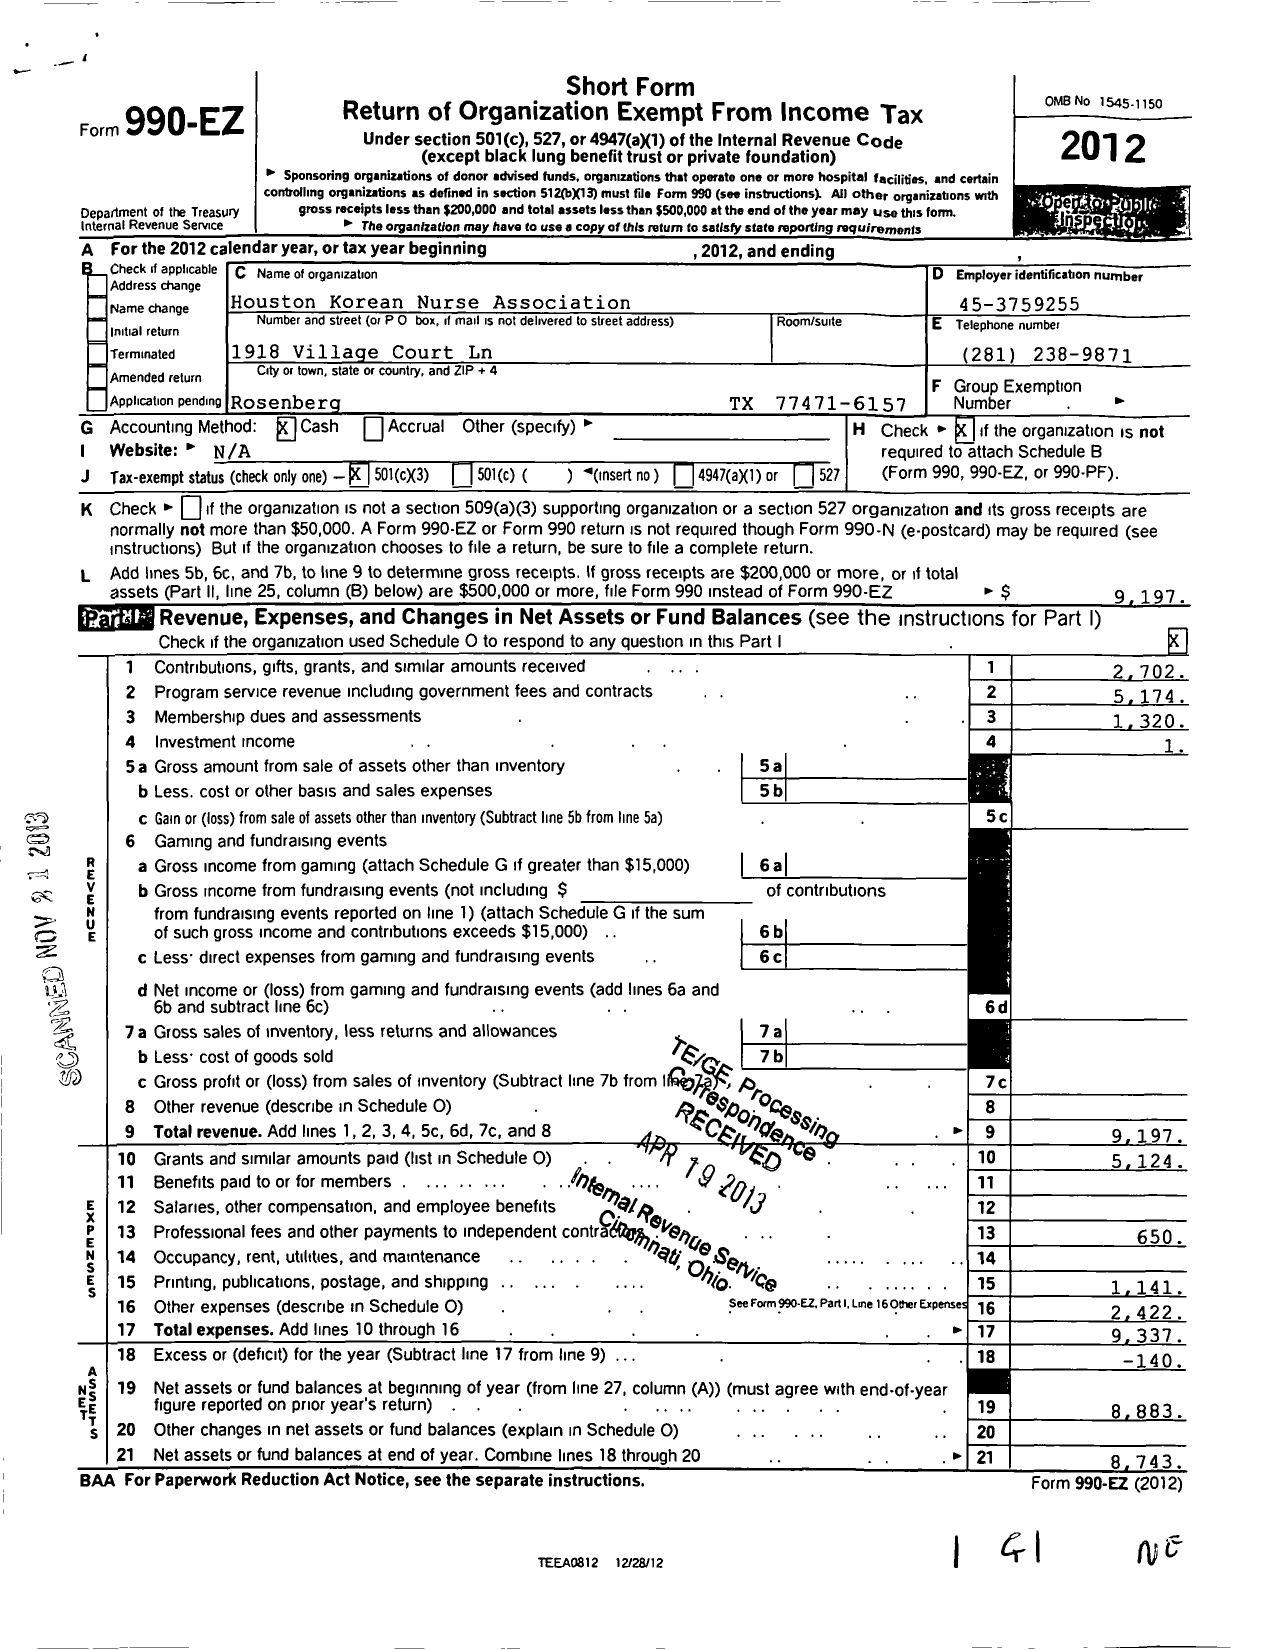 Image of first page of 2012 Form 990EZ for Houston Korean Nurse Association